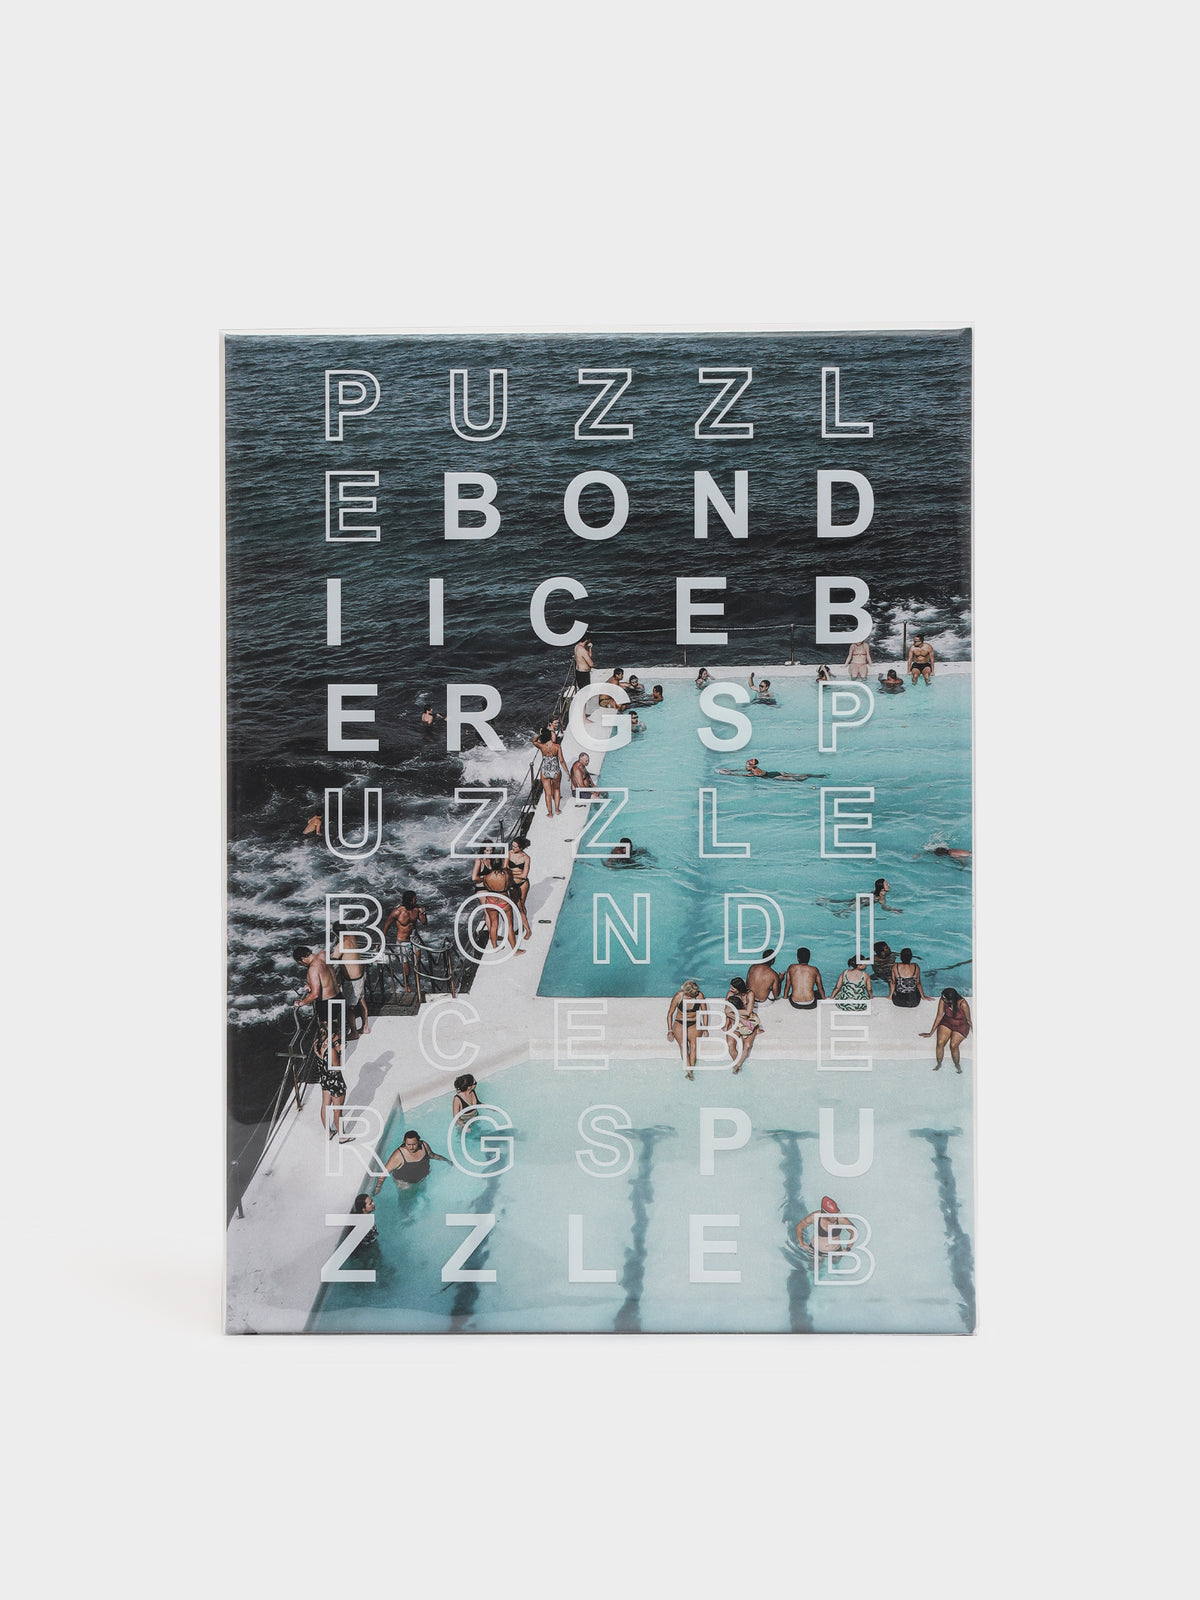 Bondi Icebergs x Poppie Pack Puzzle